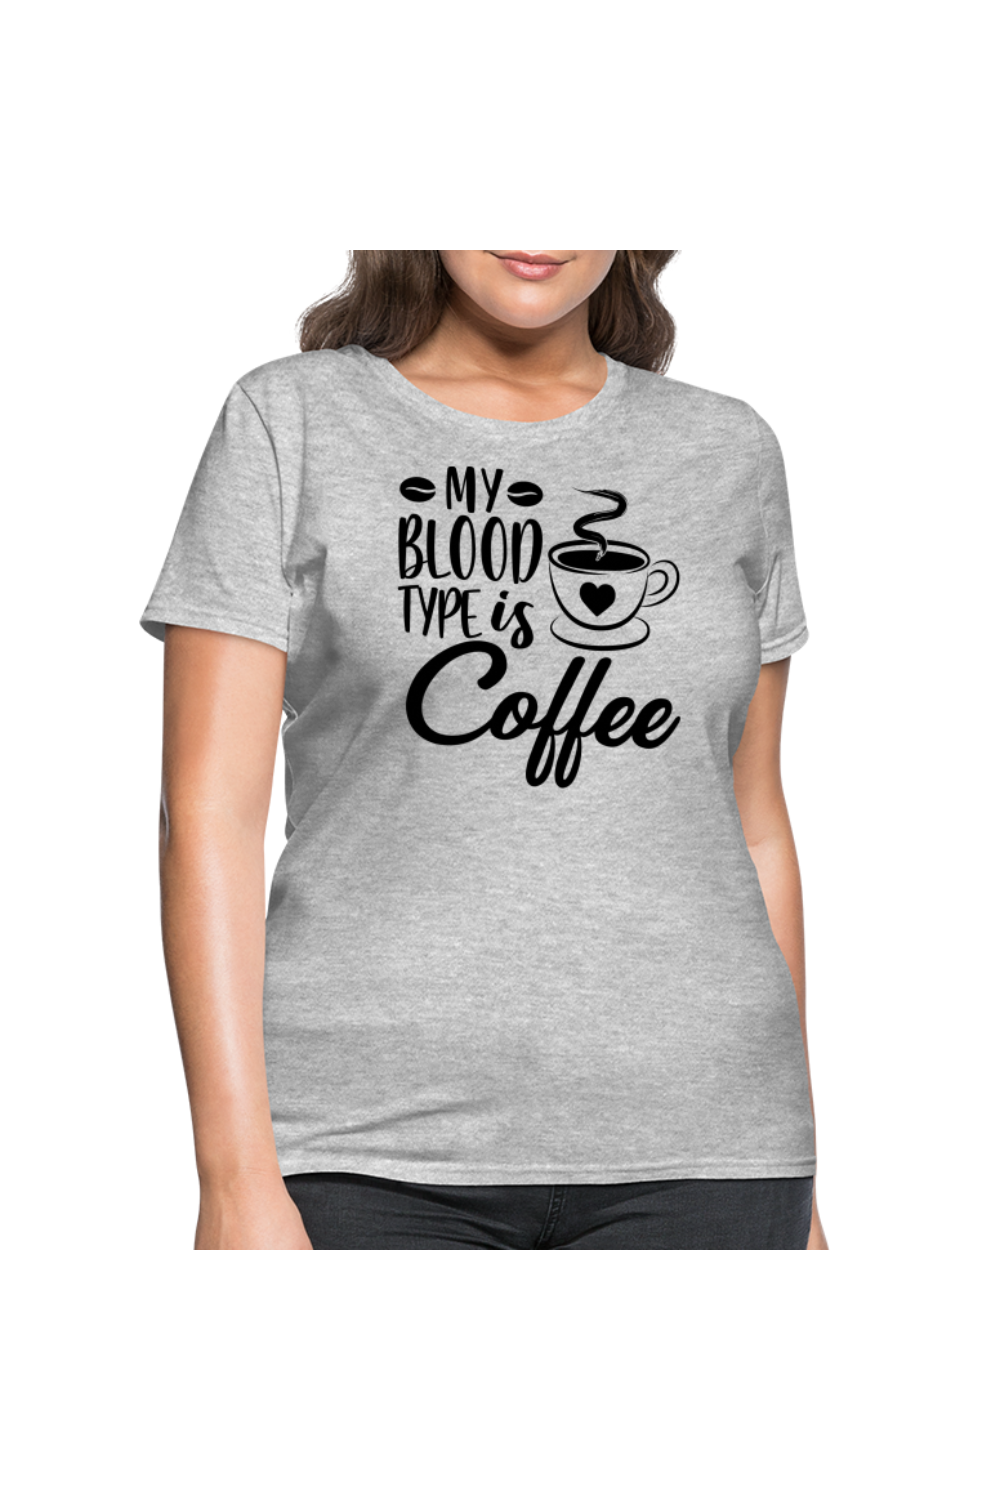 My Blood Type Is Coffee Women's Nurse T-Shirt - heather gray